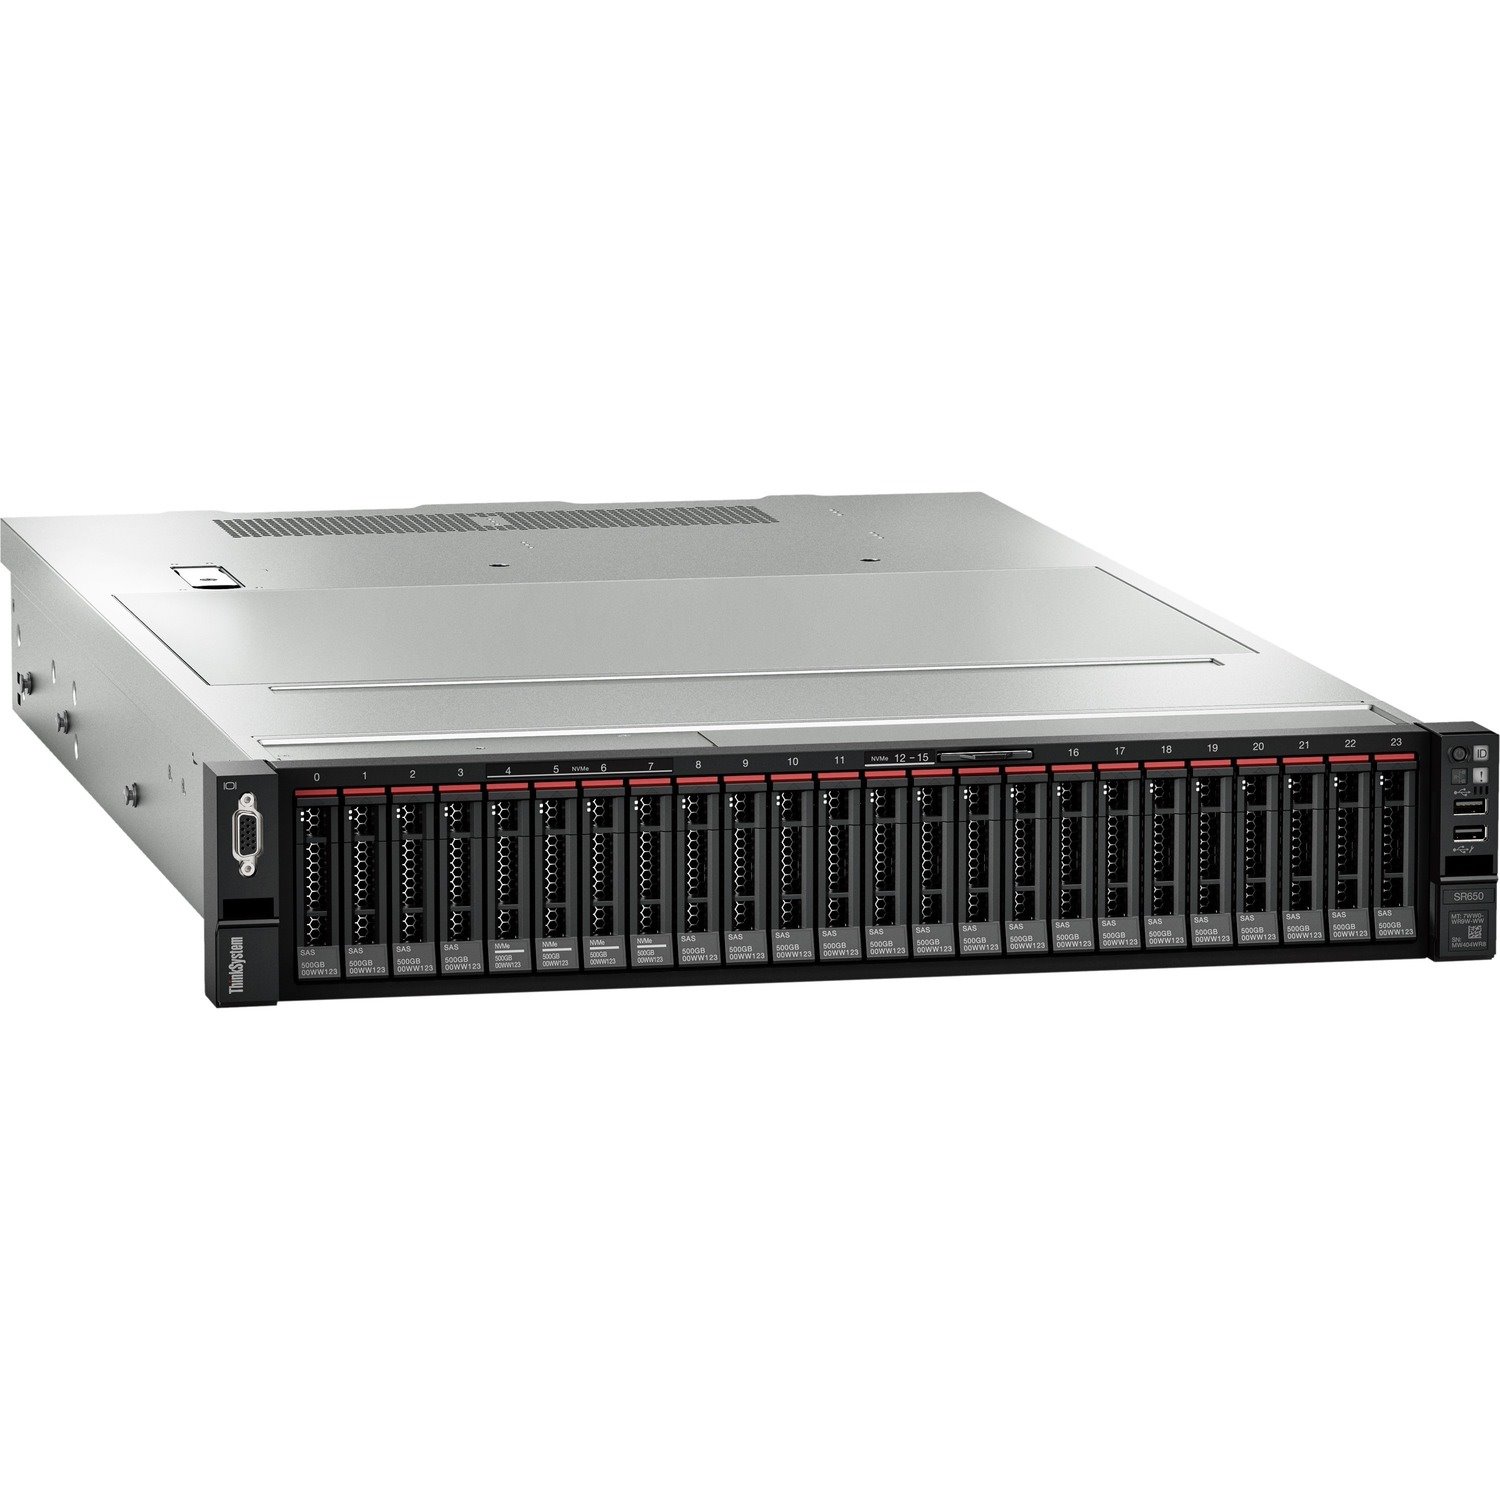 Lenovo ThinkSystem SR650 7X06A0E0AU 2U Rack Server - 1 x Intel Xeon Silver 4210 2.20 GHz - 16 GB RAM - 12Gb/s SAS, Serial ATA/600 Controller